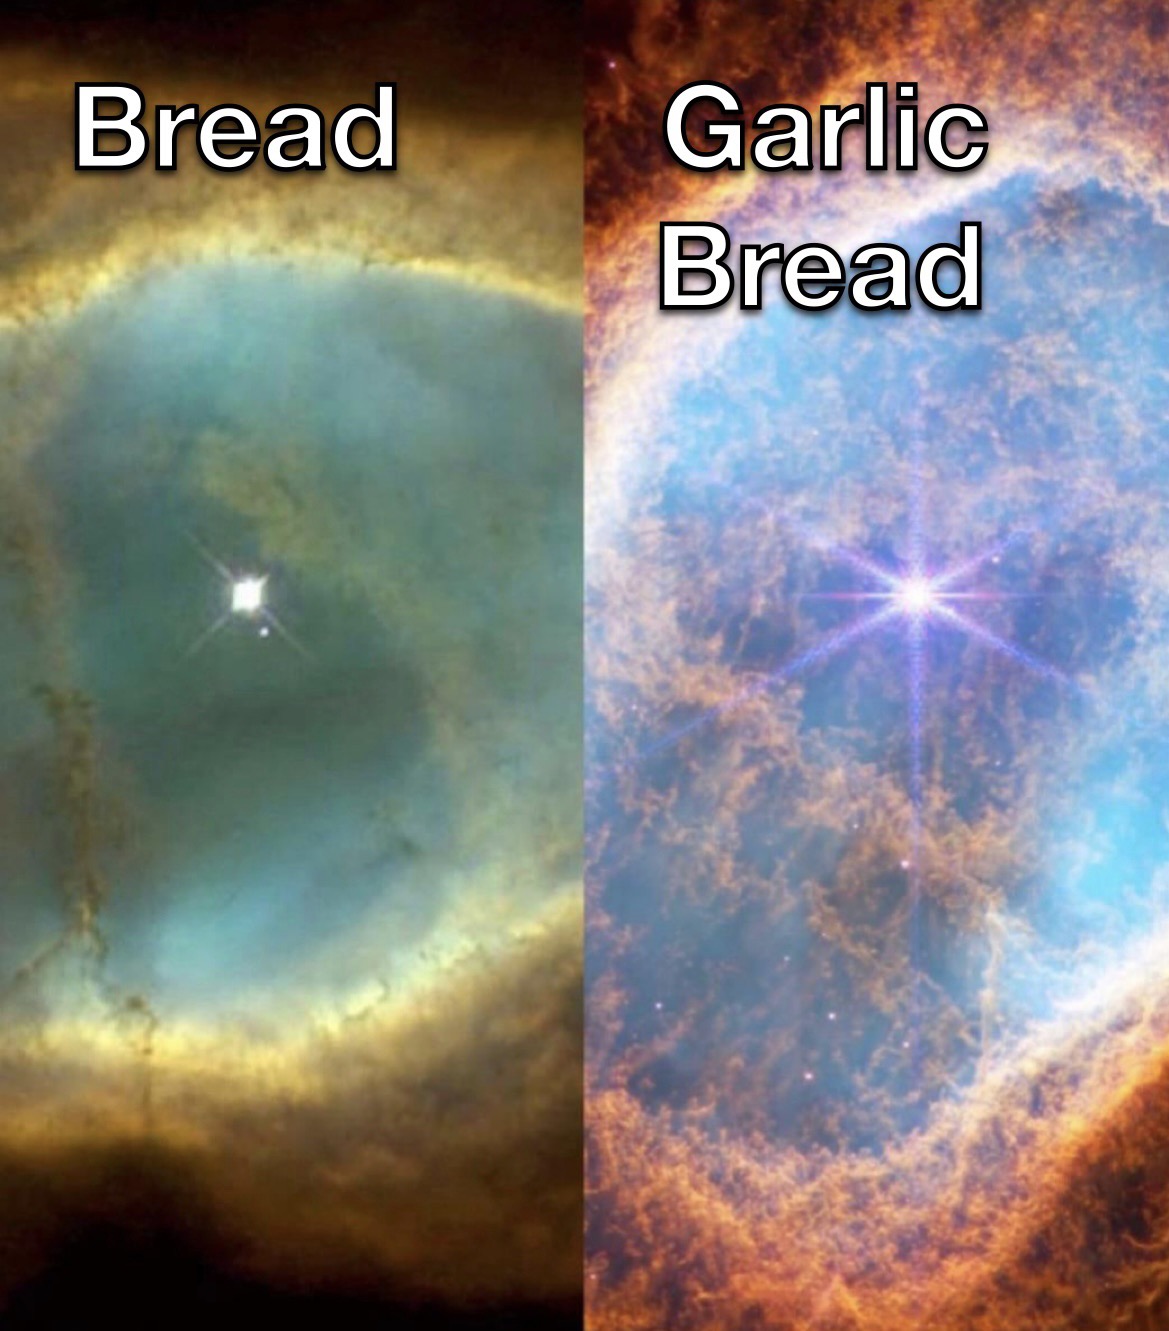 Monday Morning Randomness - southern ring nebula james webb - Bread Garlic Bread